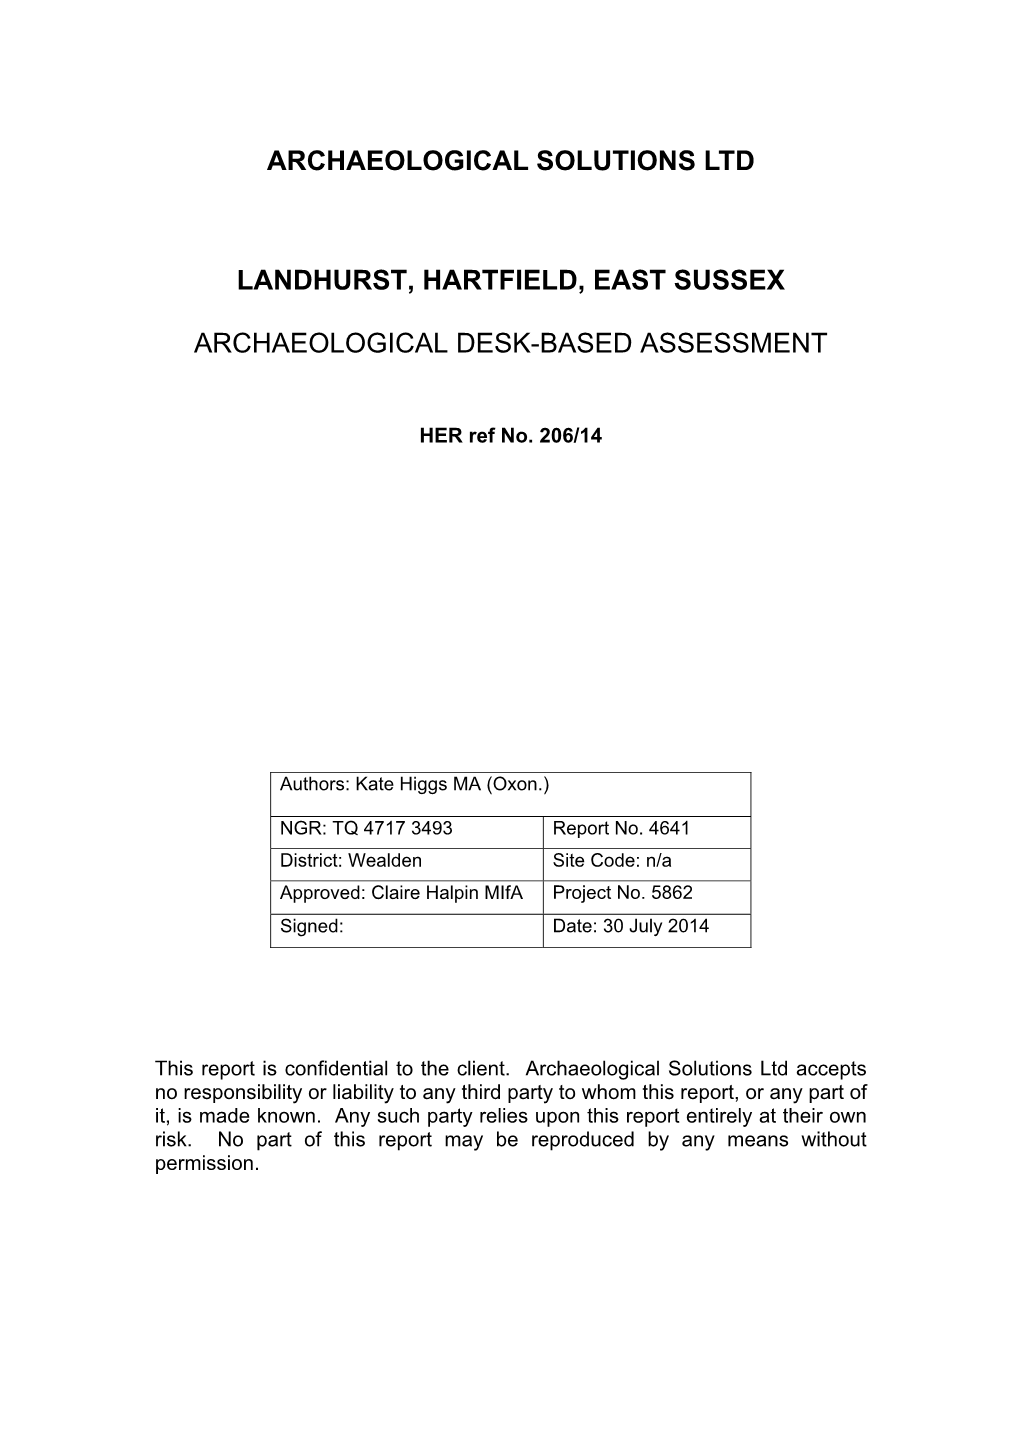 Archaeological Solutions Ltd Landhurst, Hartfield, East Sussex